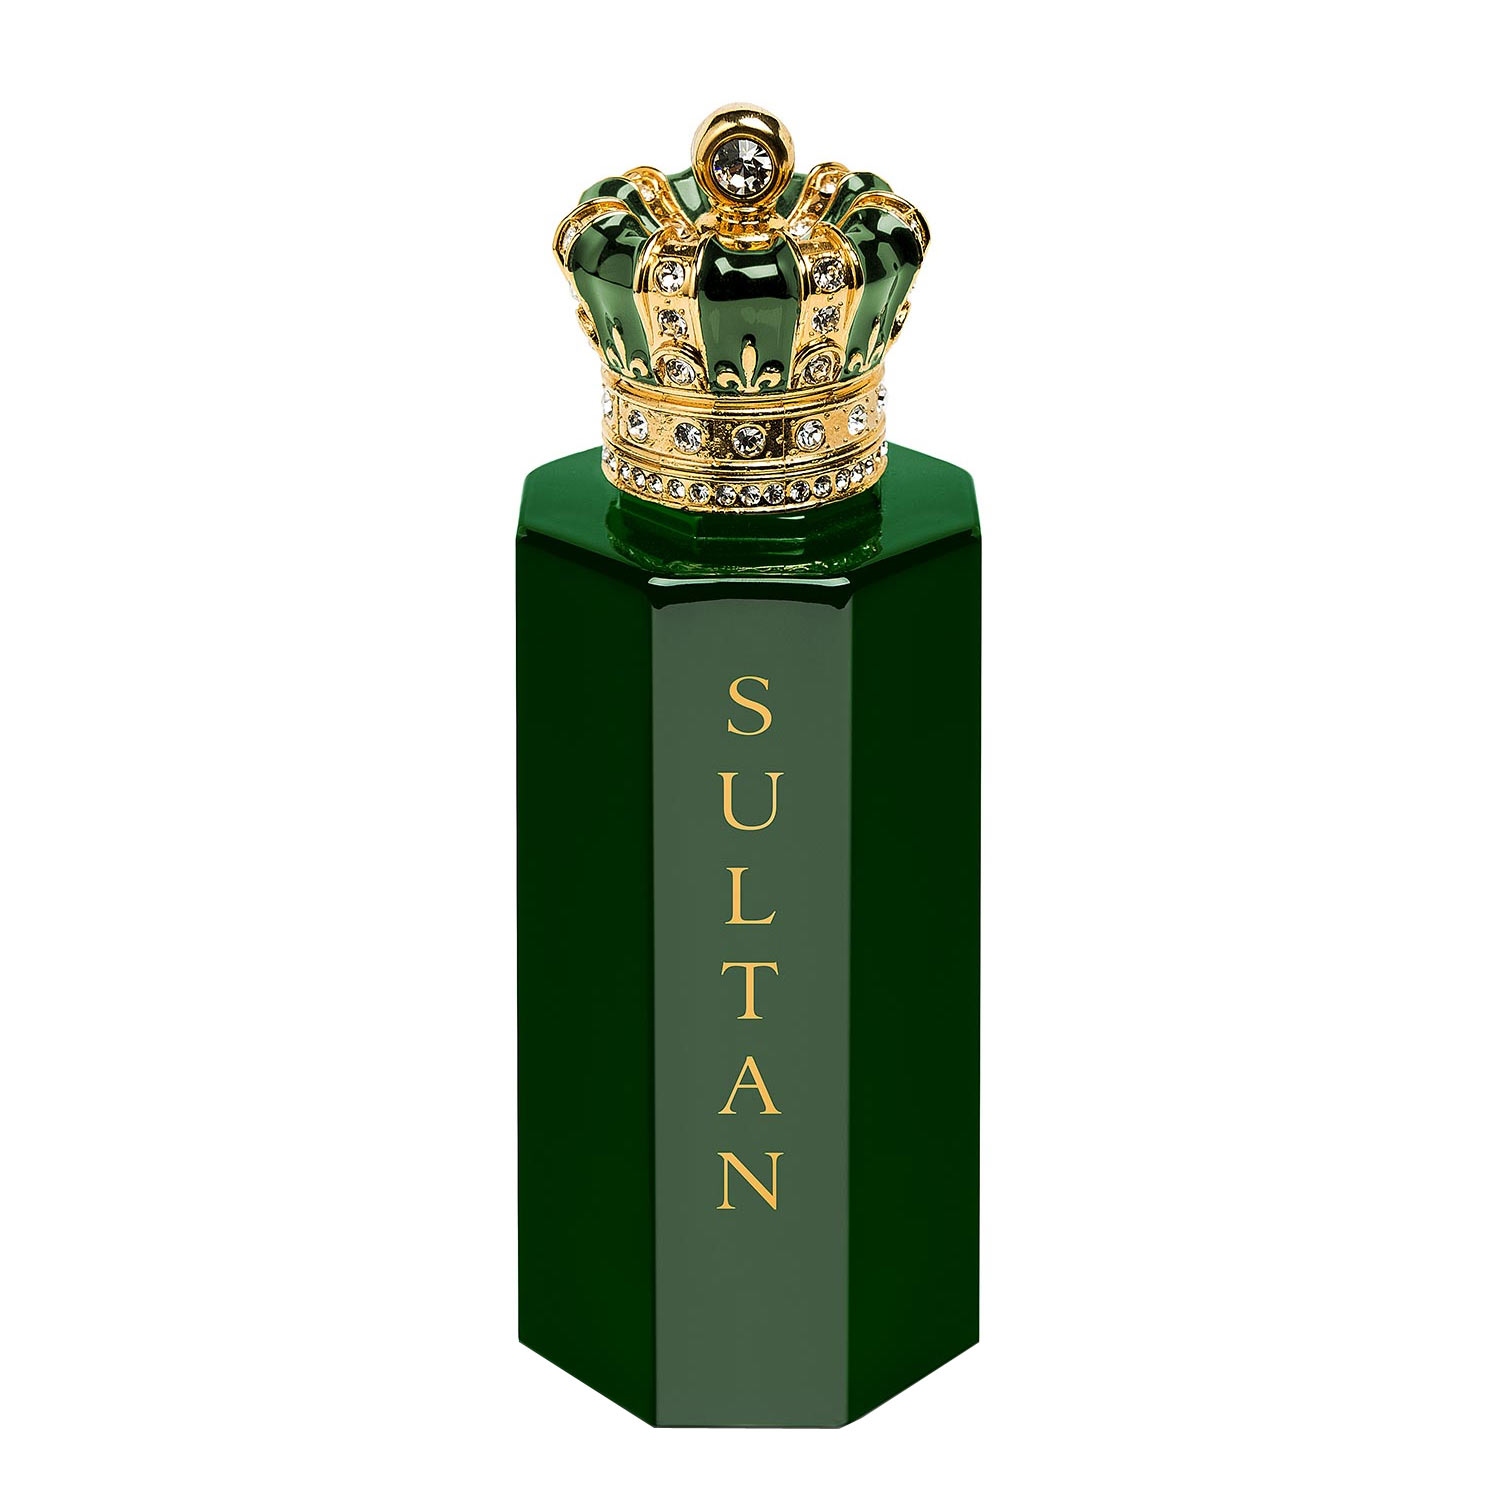 Sultan Royal Crown Image